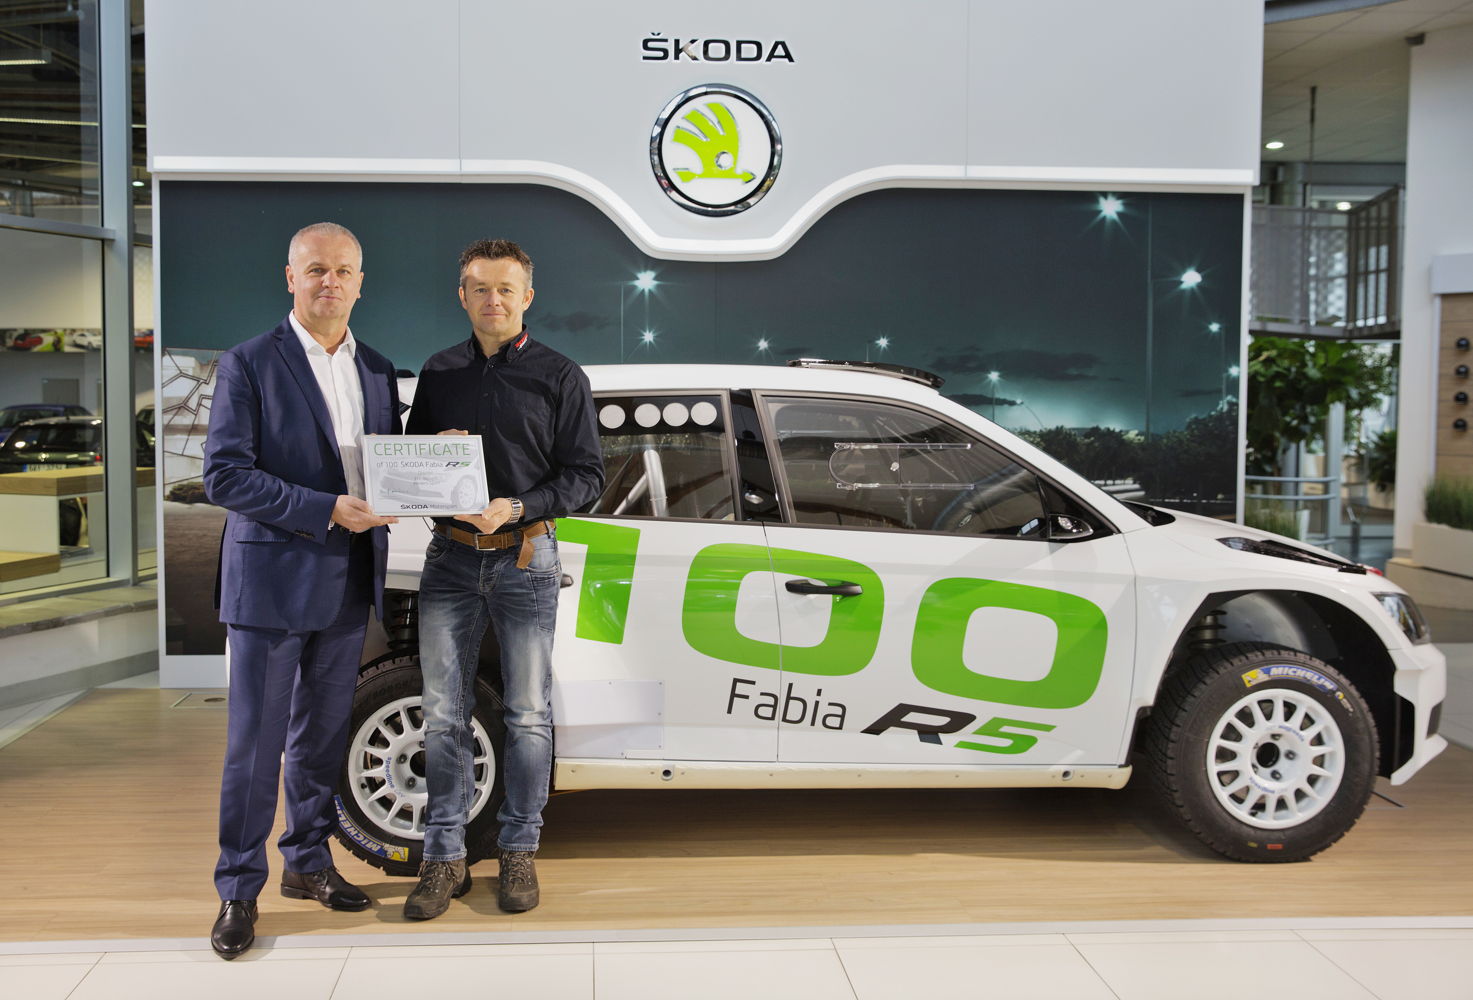 Erik Wevers’ (right) team received the 100th car in Mladá Boleslav. According to ŠKODA Motorsport Director Michal Hrabánek (left), the handover marks another milestone for the successful ŠKODA FABIA R5.